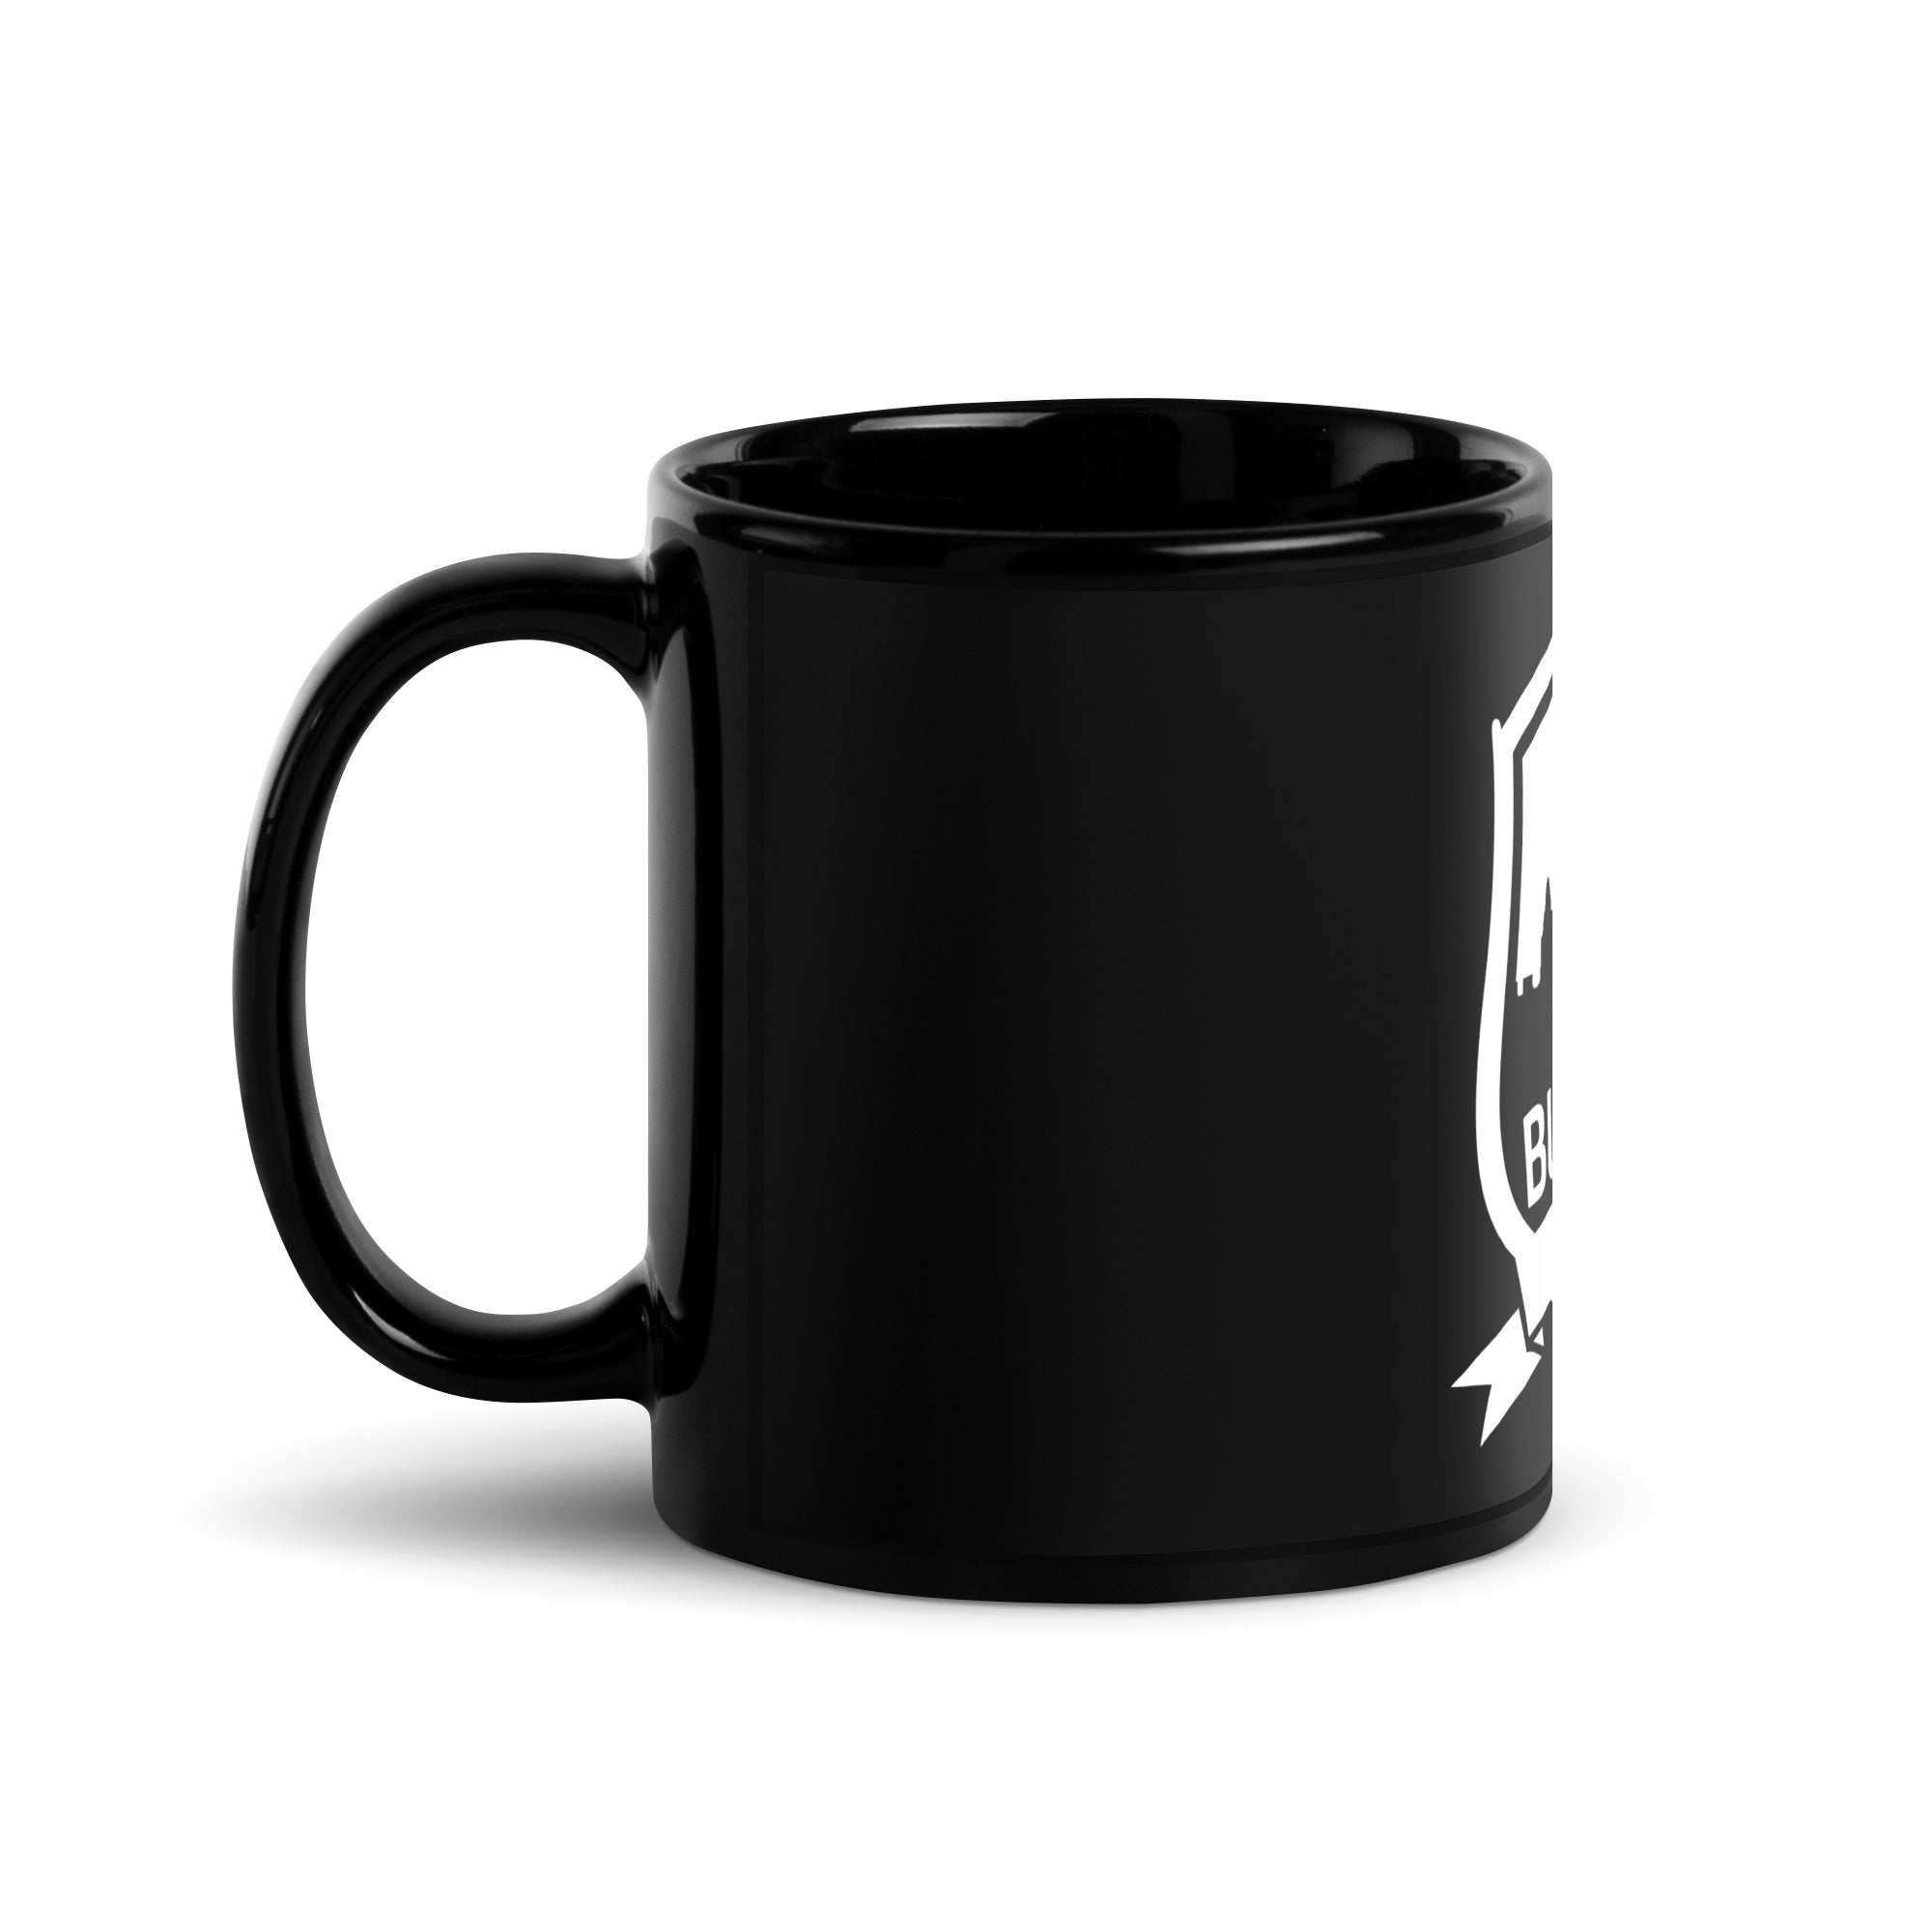 Buffalo Night Black Glossy Mug